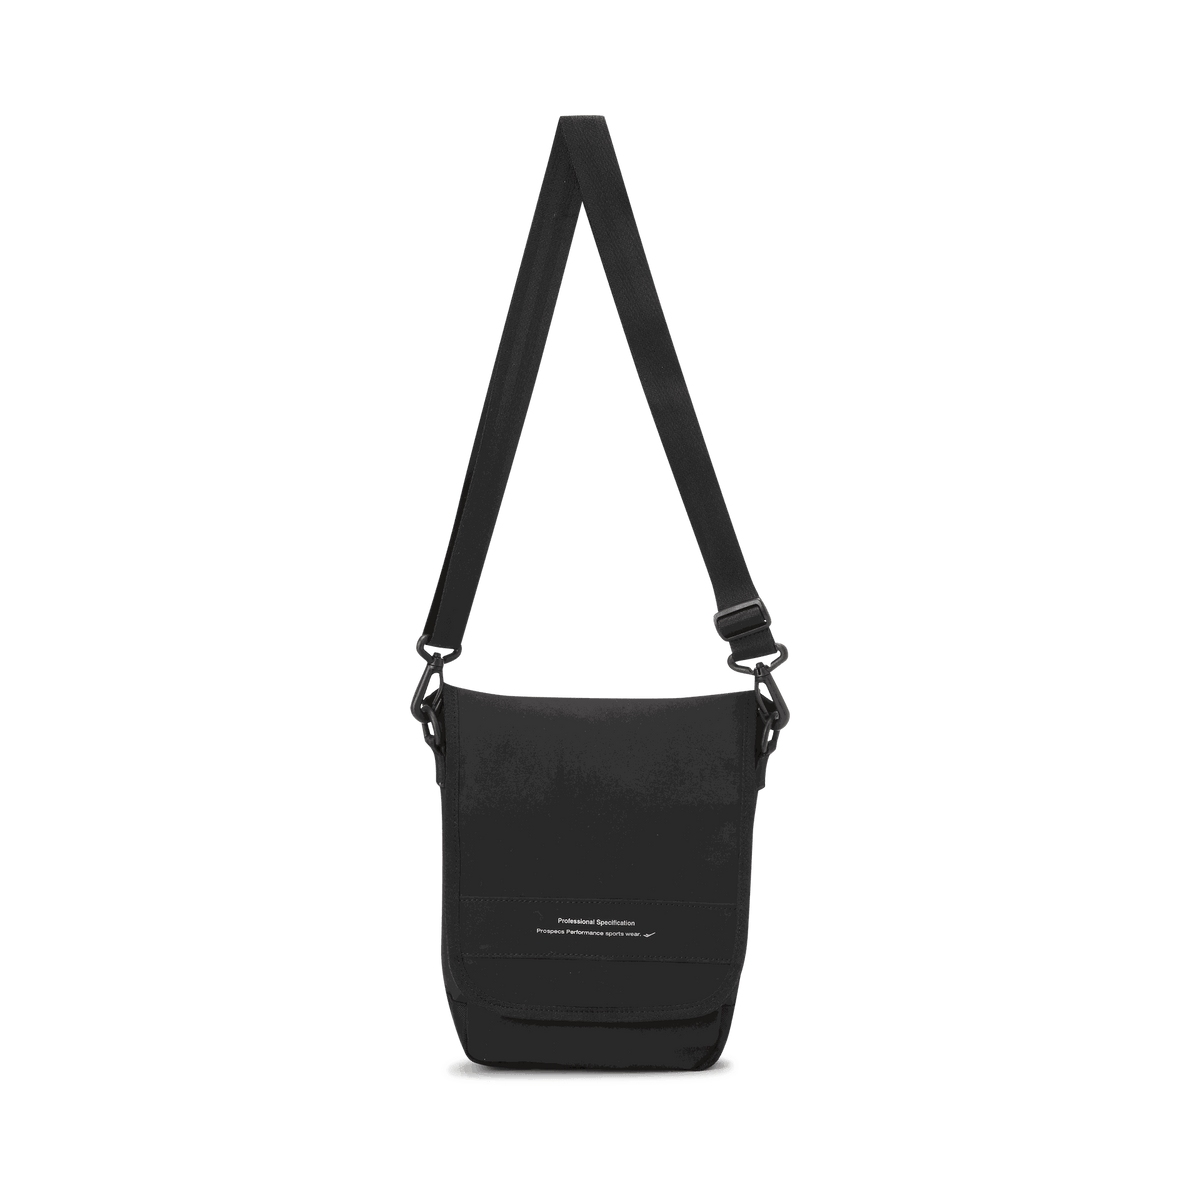 Túi xách thể thao PROSPECS Unisex Performance mobile messenger bag (medium) BC-Y051